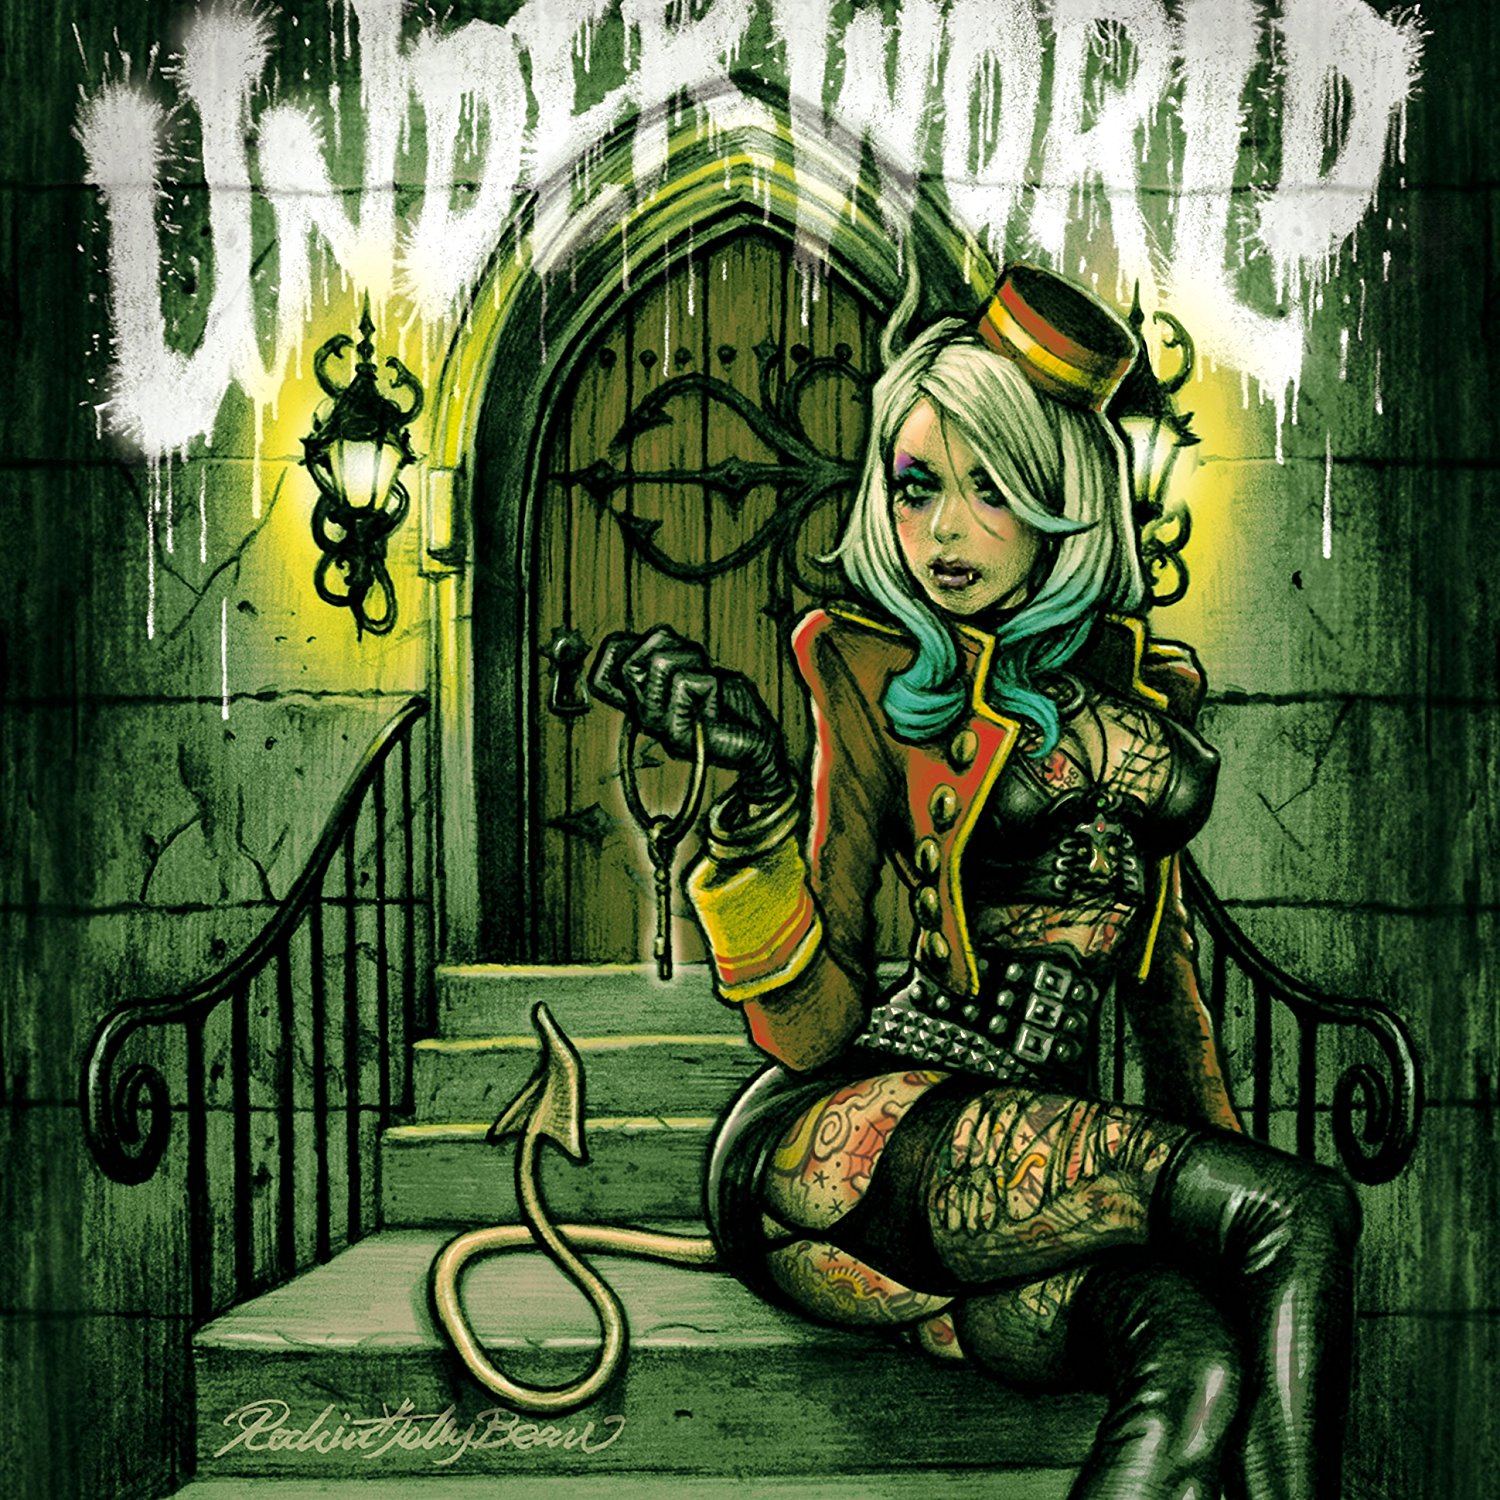 Underworld [SHM-CD+Blu-ray+DVD Limited Edition]